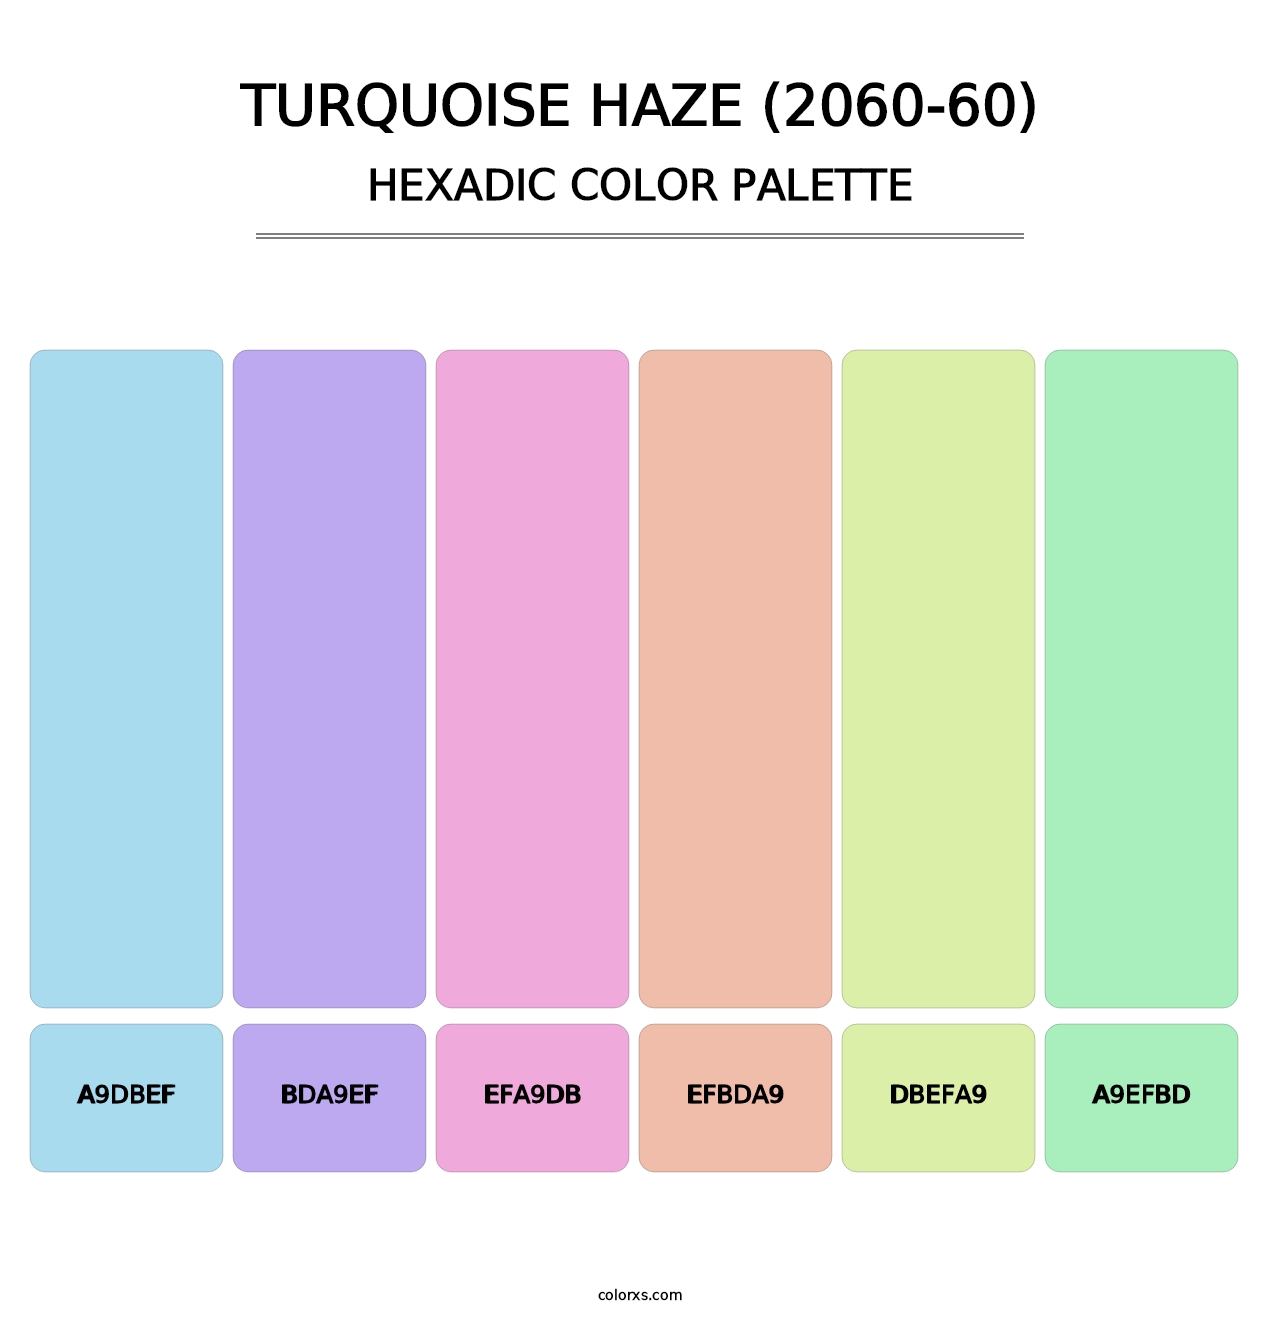 Turquoise Haze (2060-60) - Hexadic Color Palette